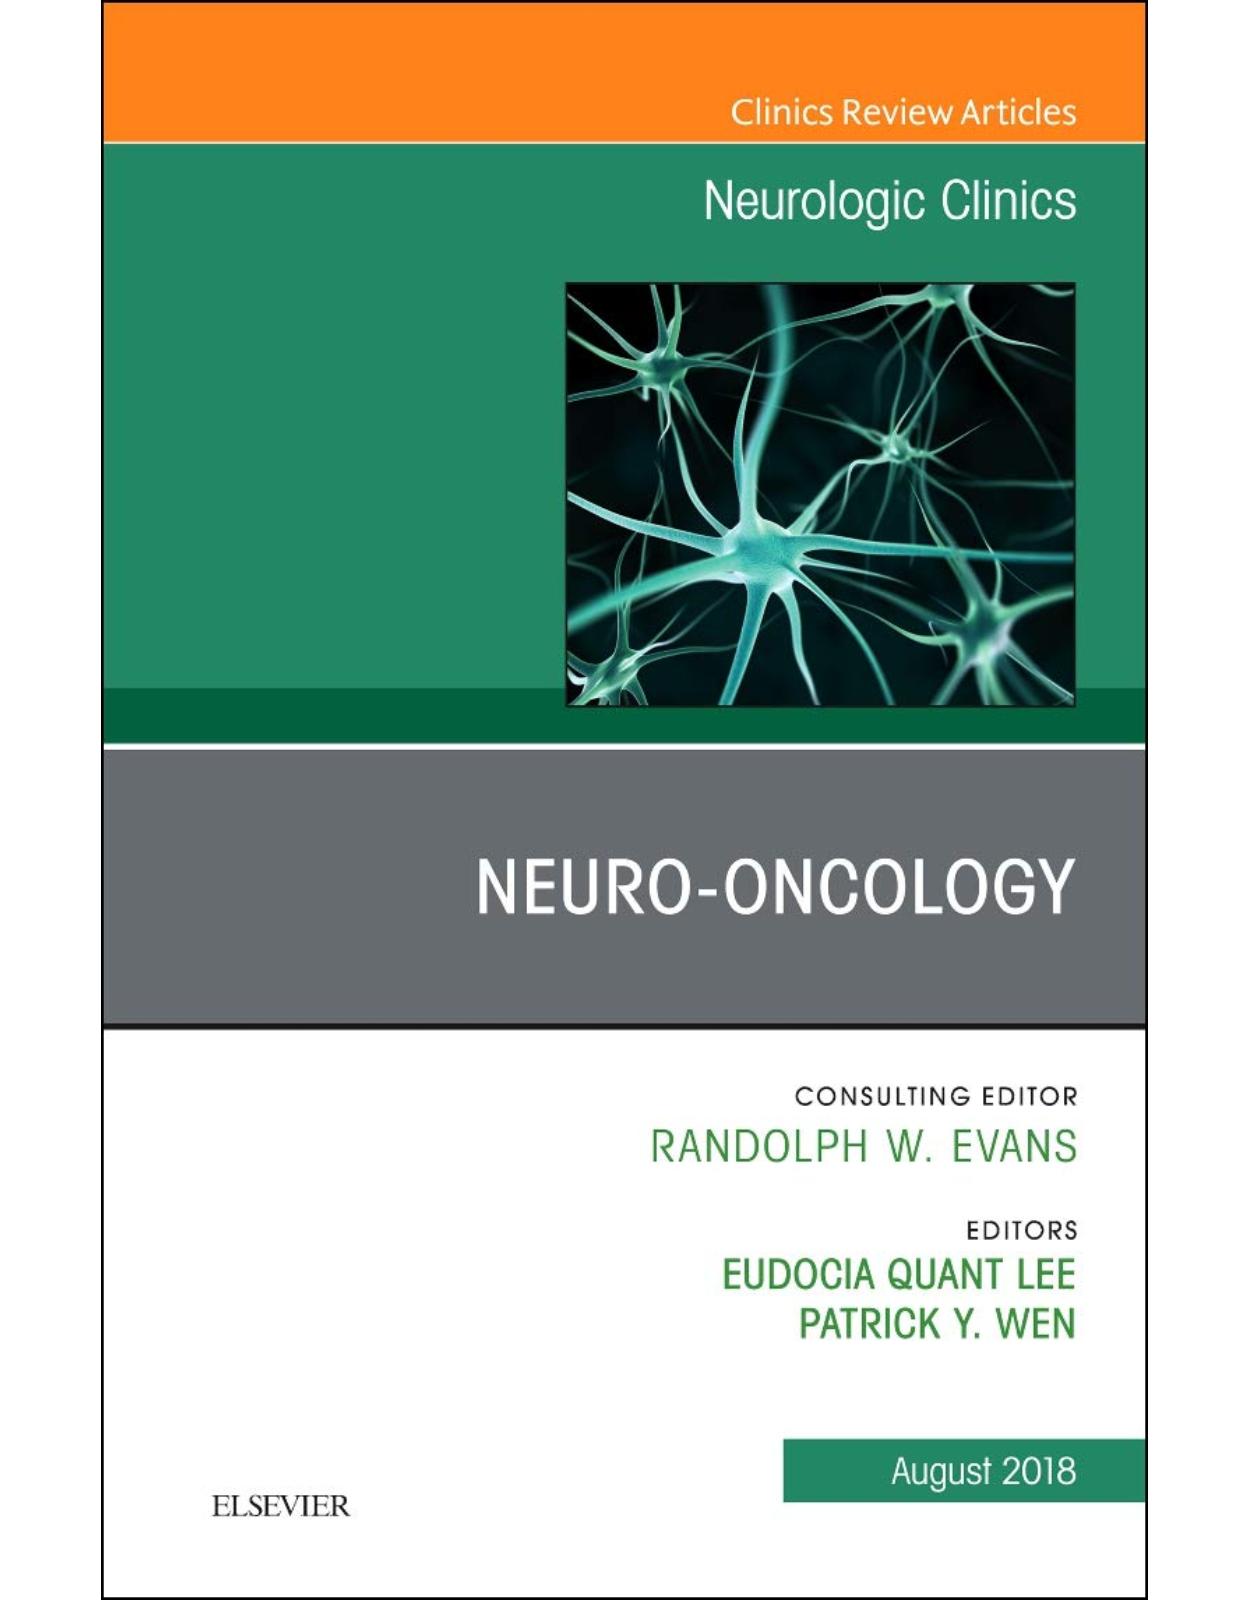 Neuro-oncology, An Issue of Neurologic Clinics, Volume 36-3